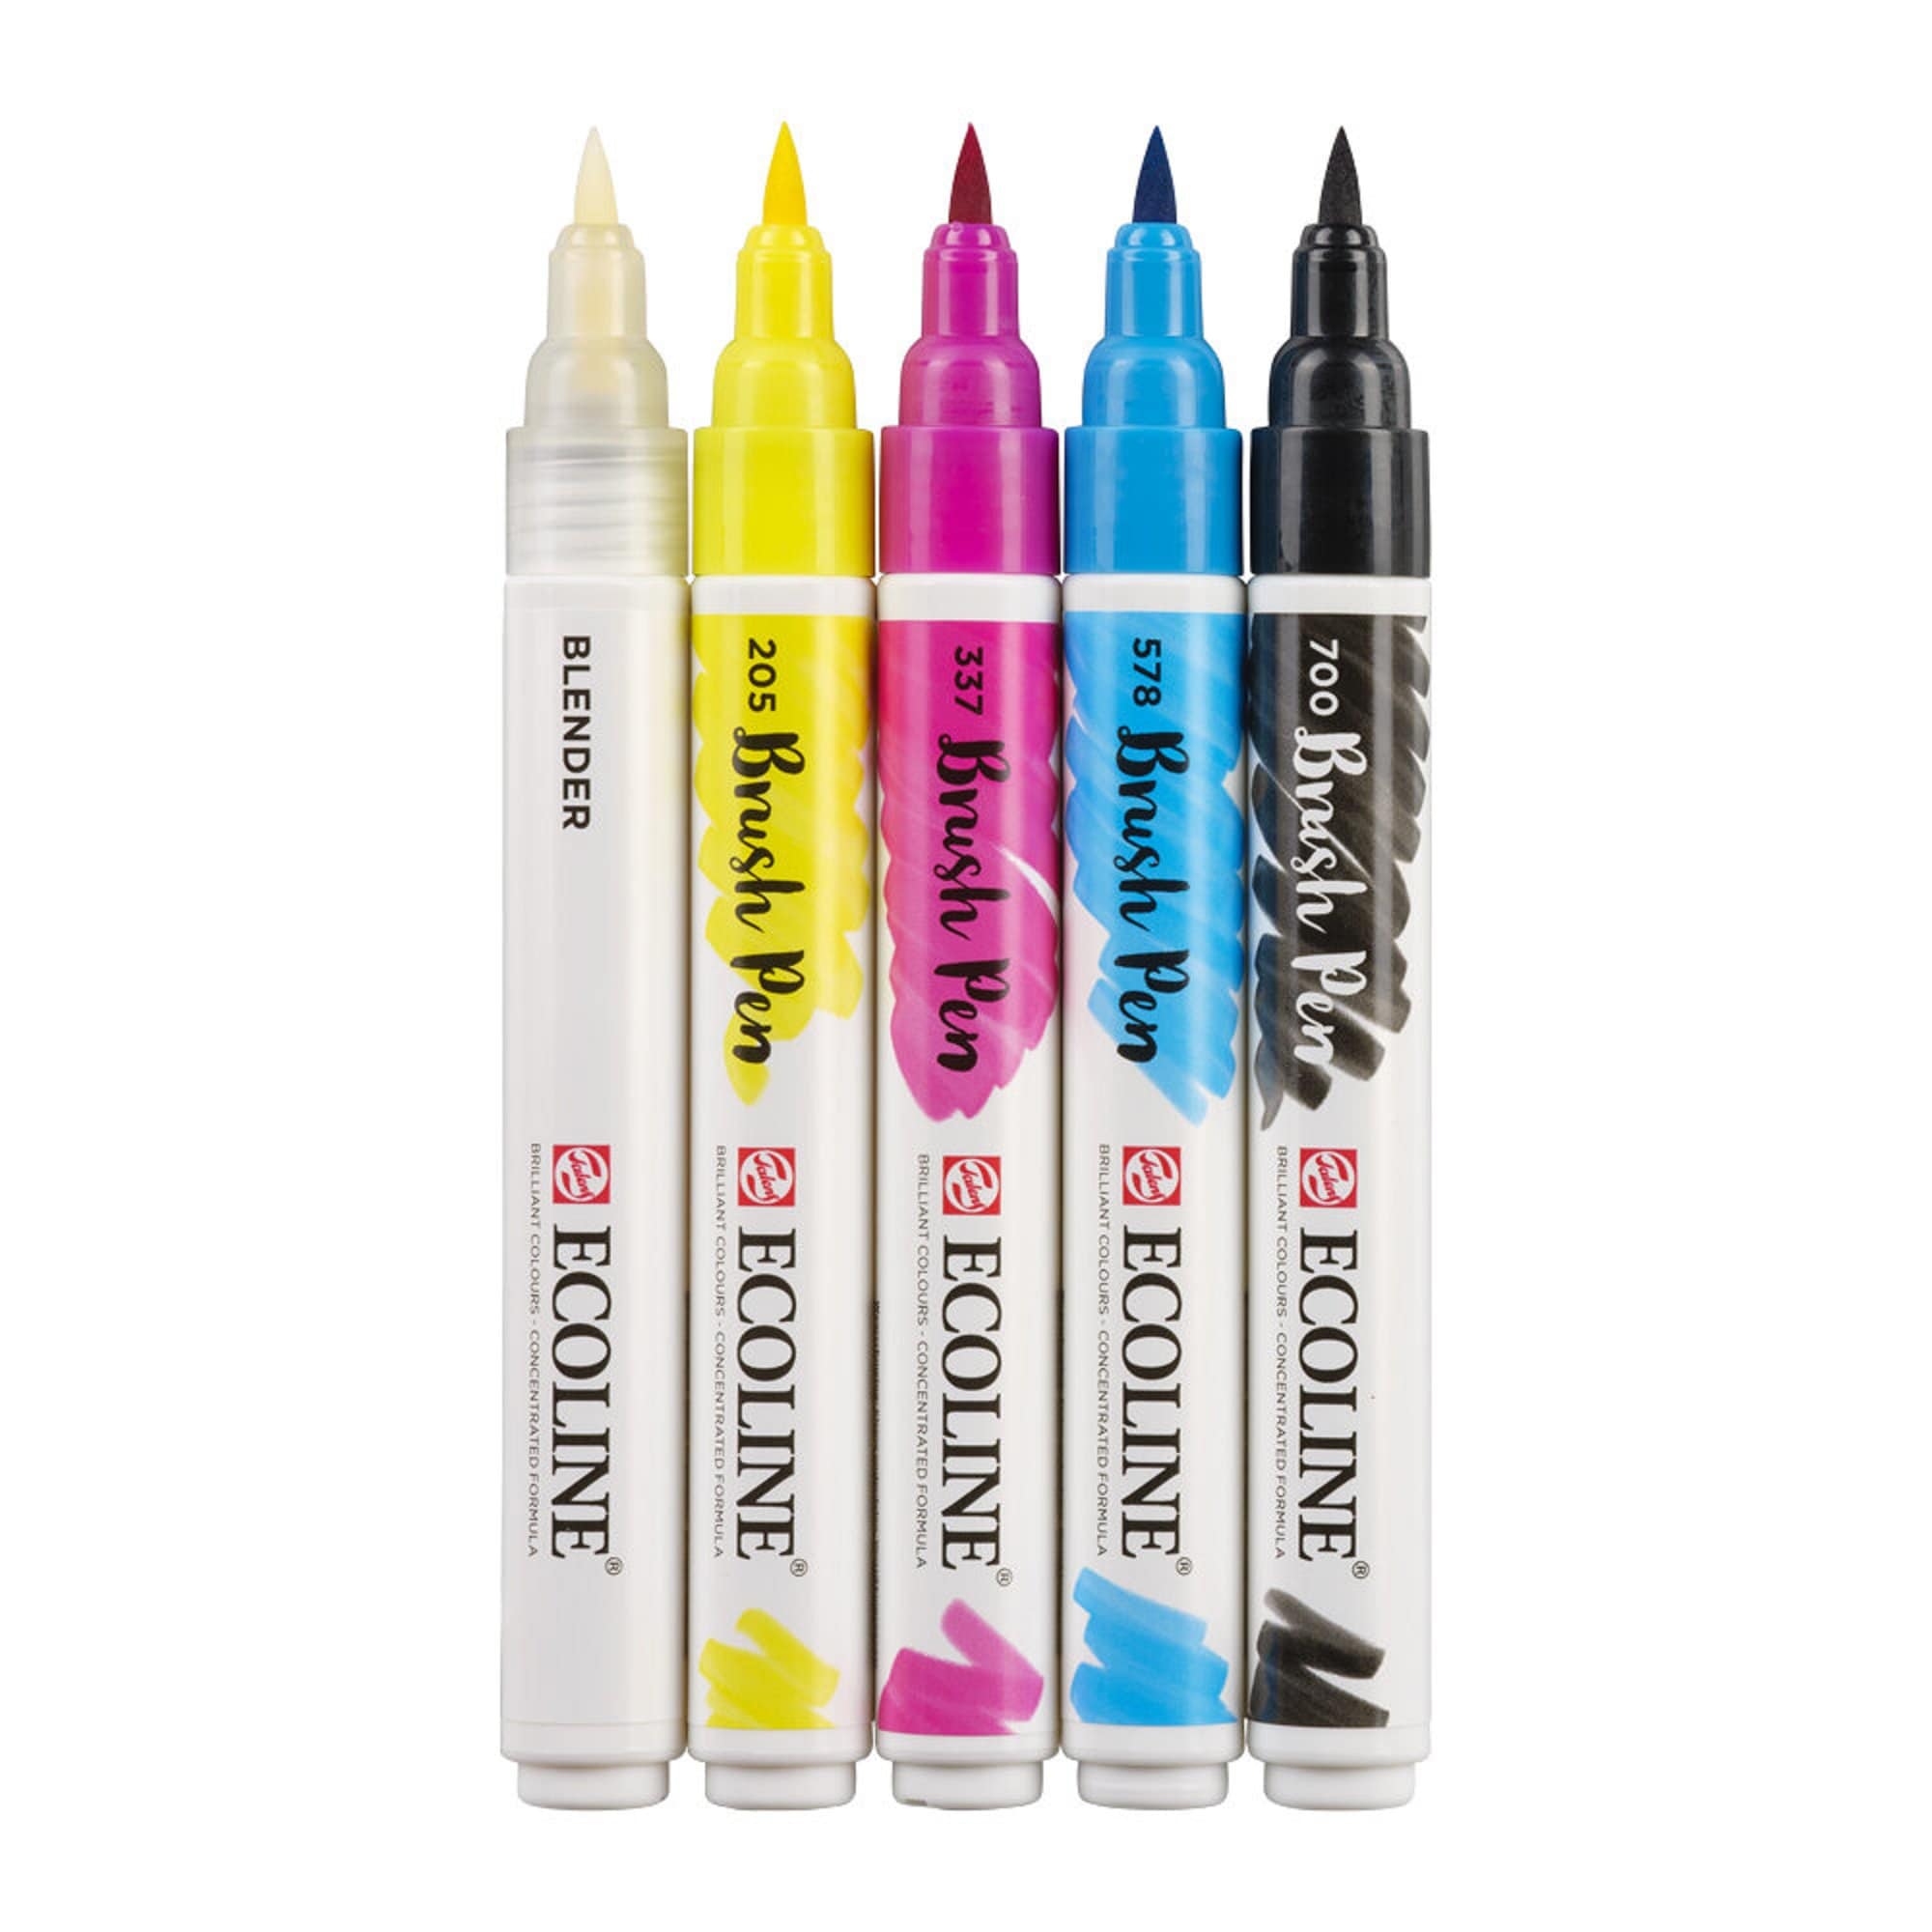 Talens Ecoline Watercolor Brush Pen Blender 902